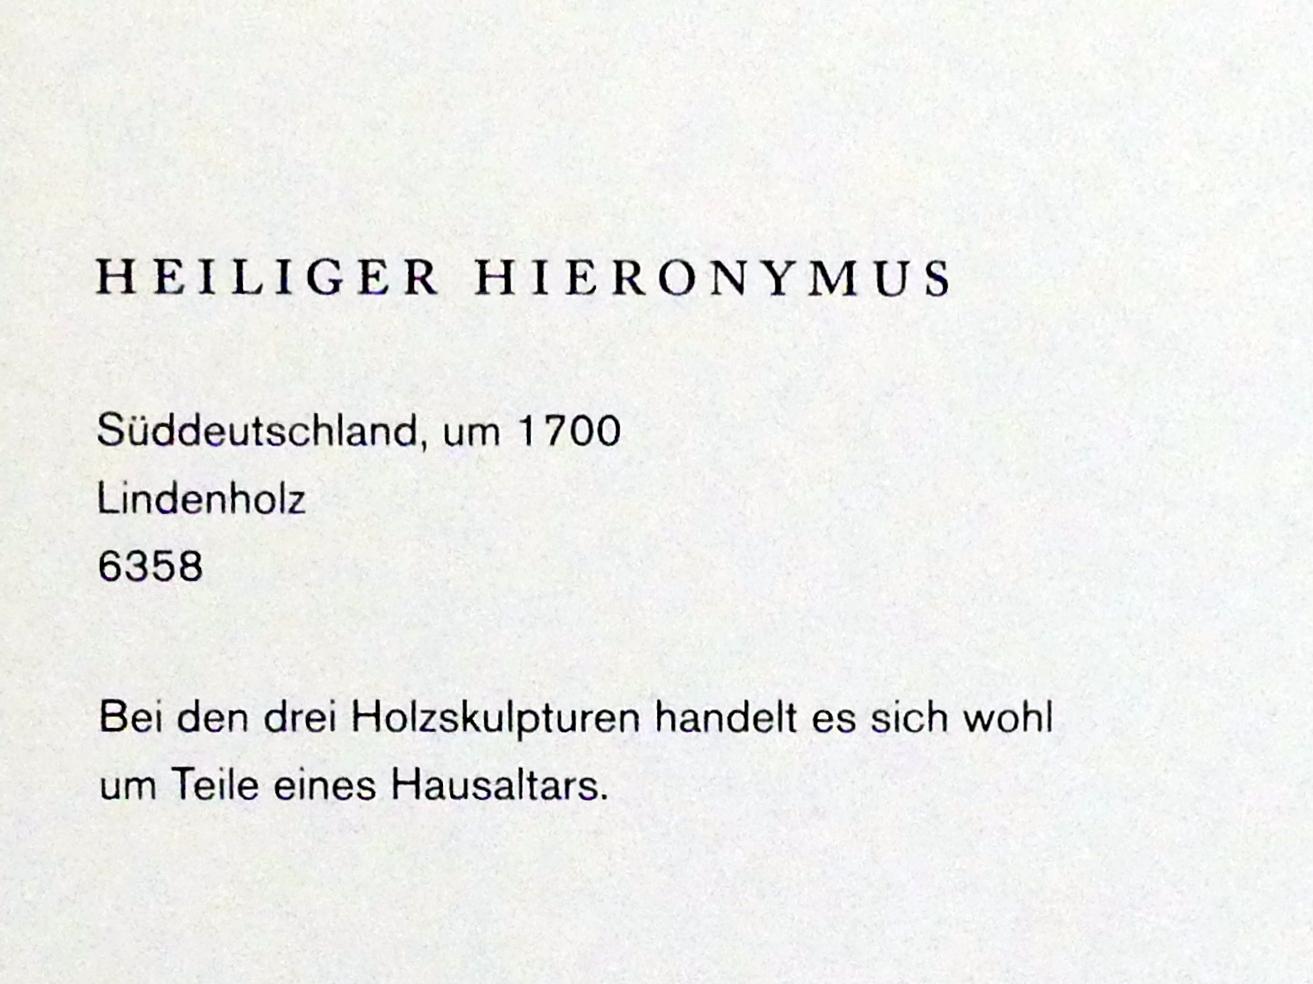 Heiliger Hieronymus, Augsburg, Maximilian Museum, Sammlung Röhrer, um 1700, Bild 2/2